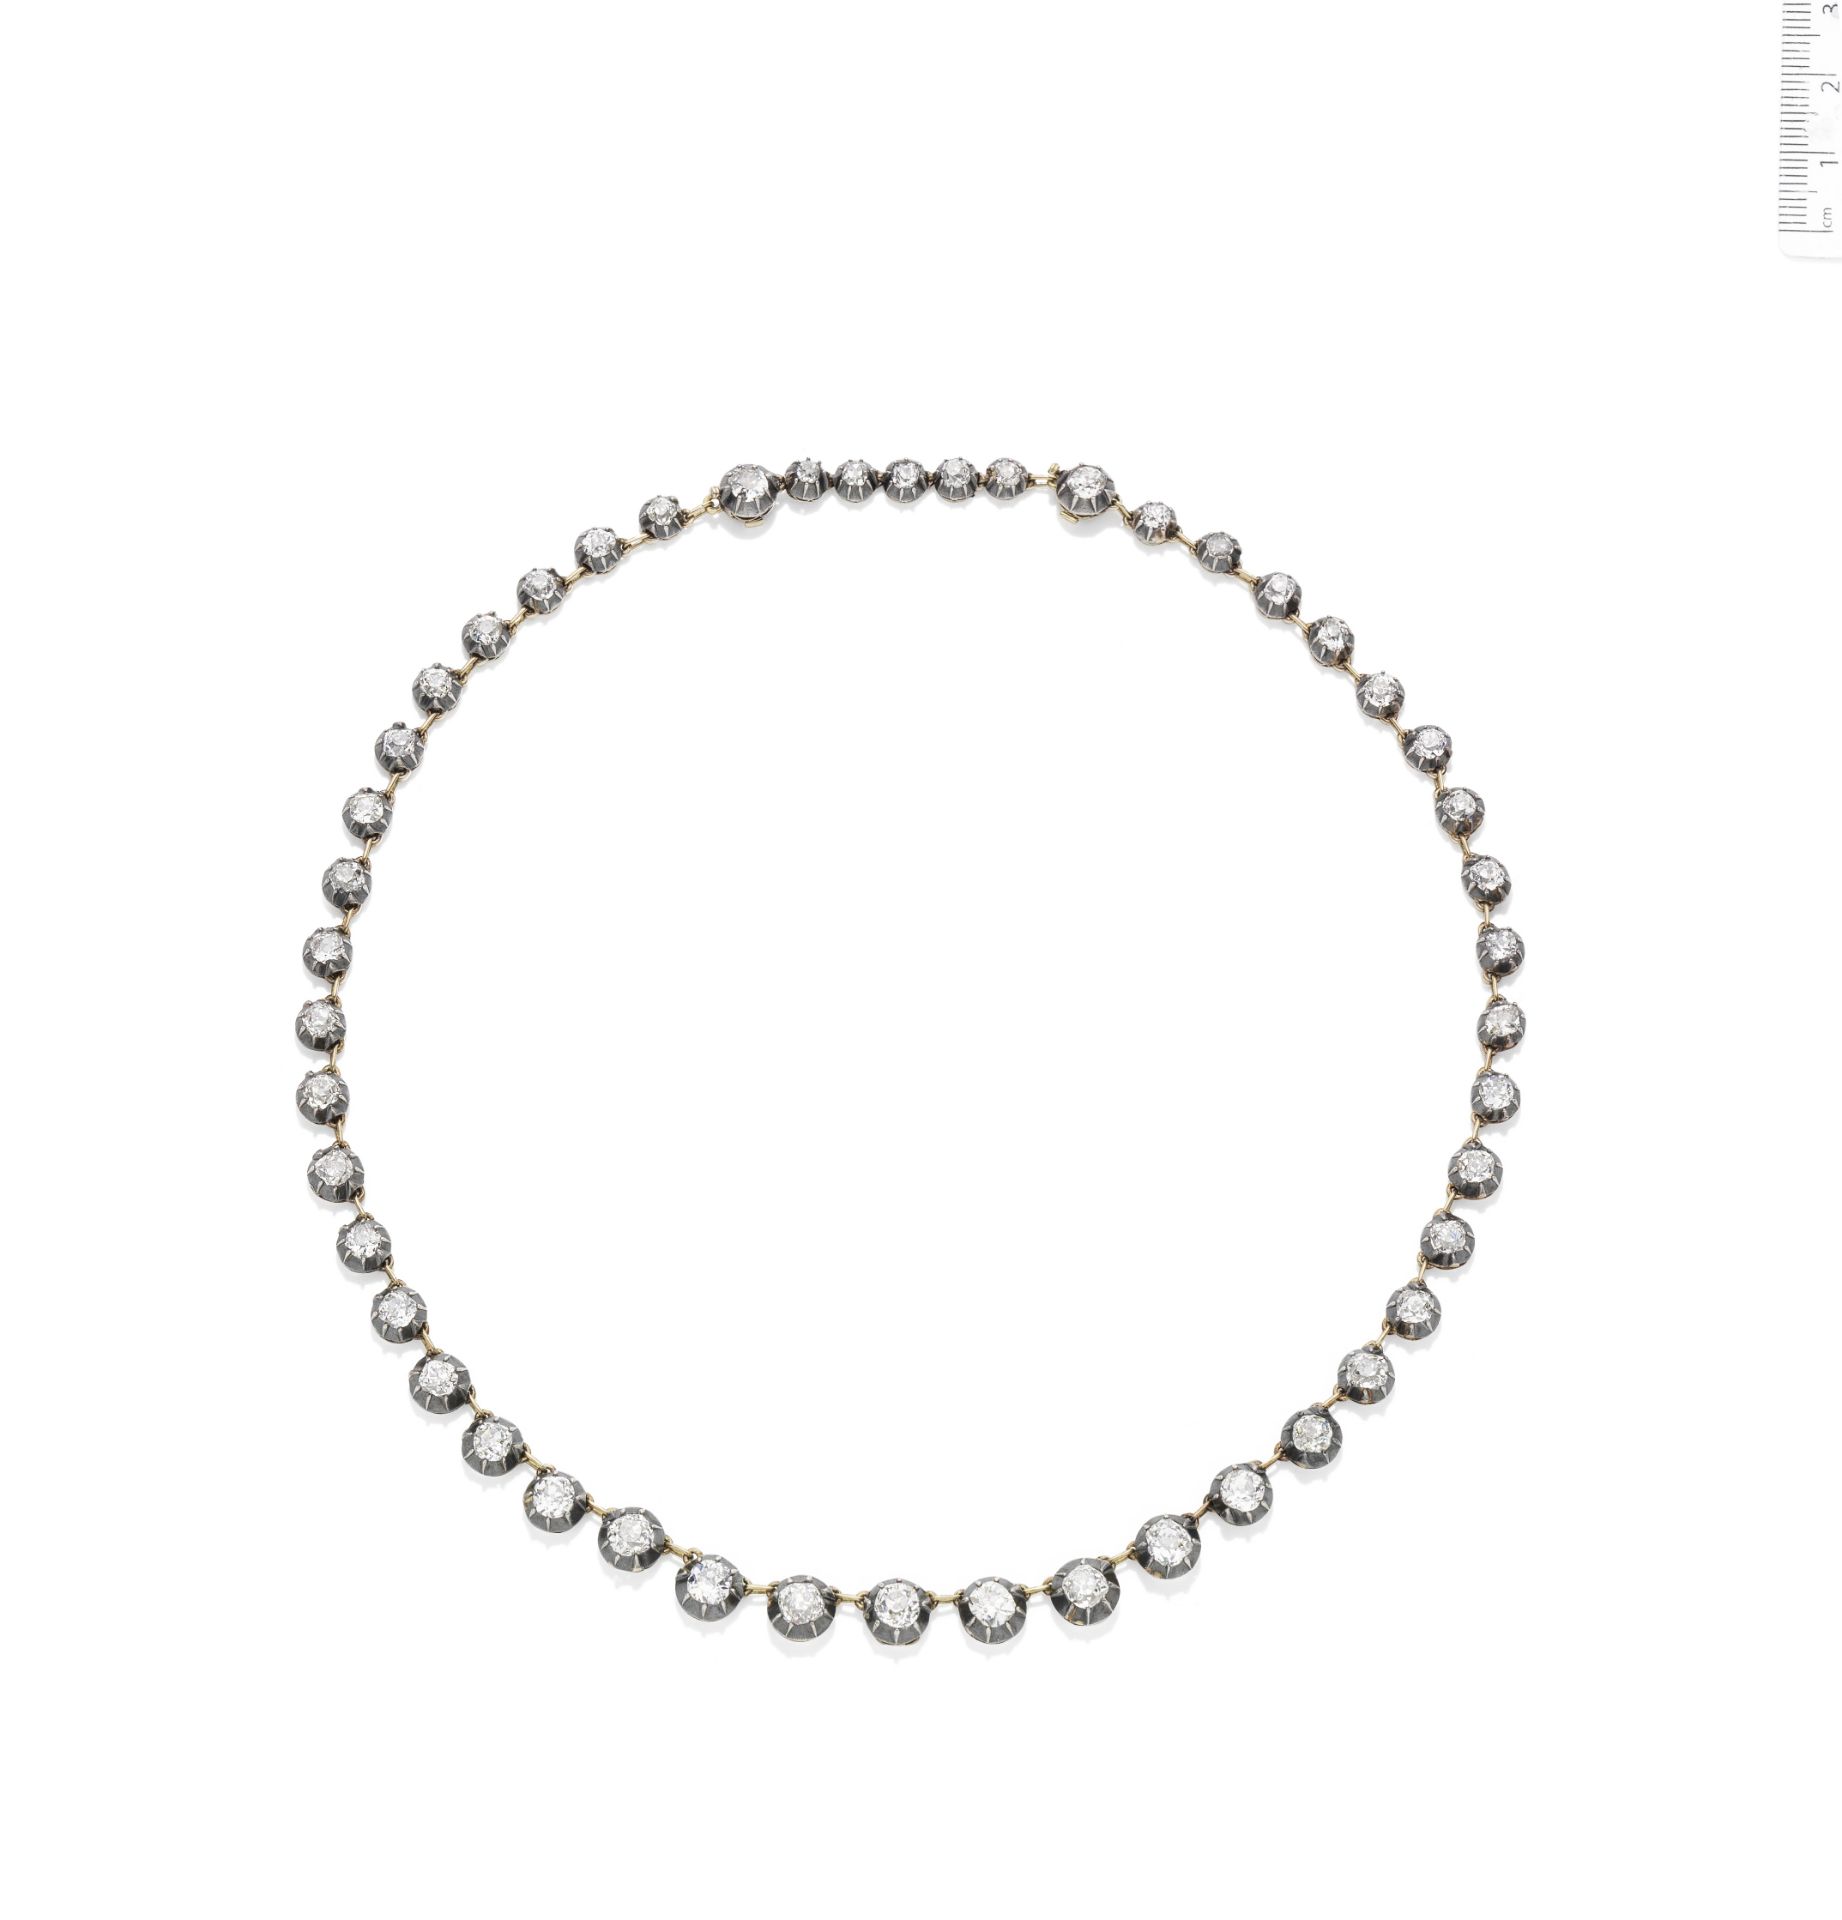 A 19th century diamond rivière necklace - Image 2 of 2